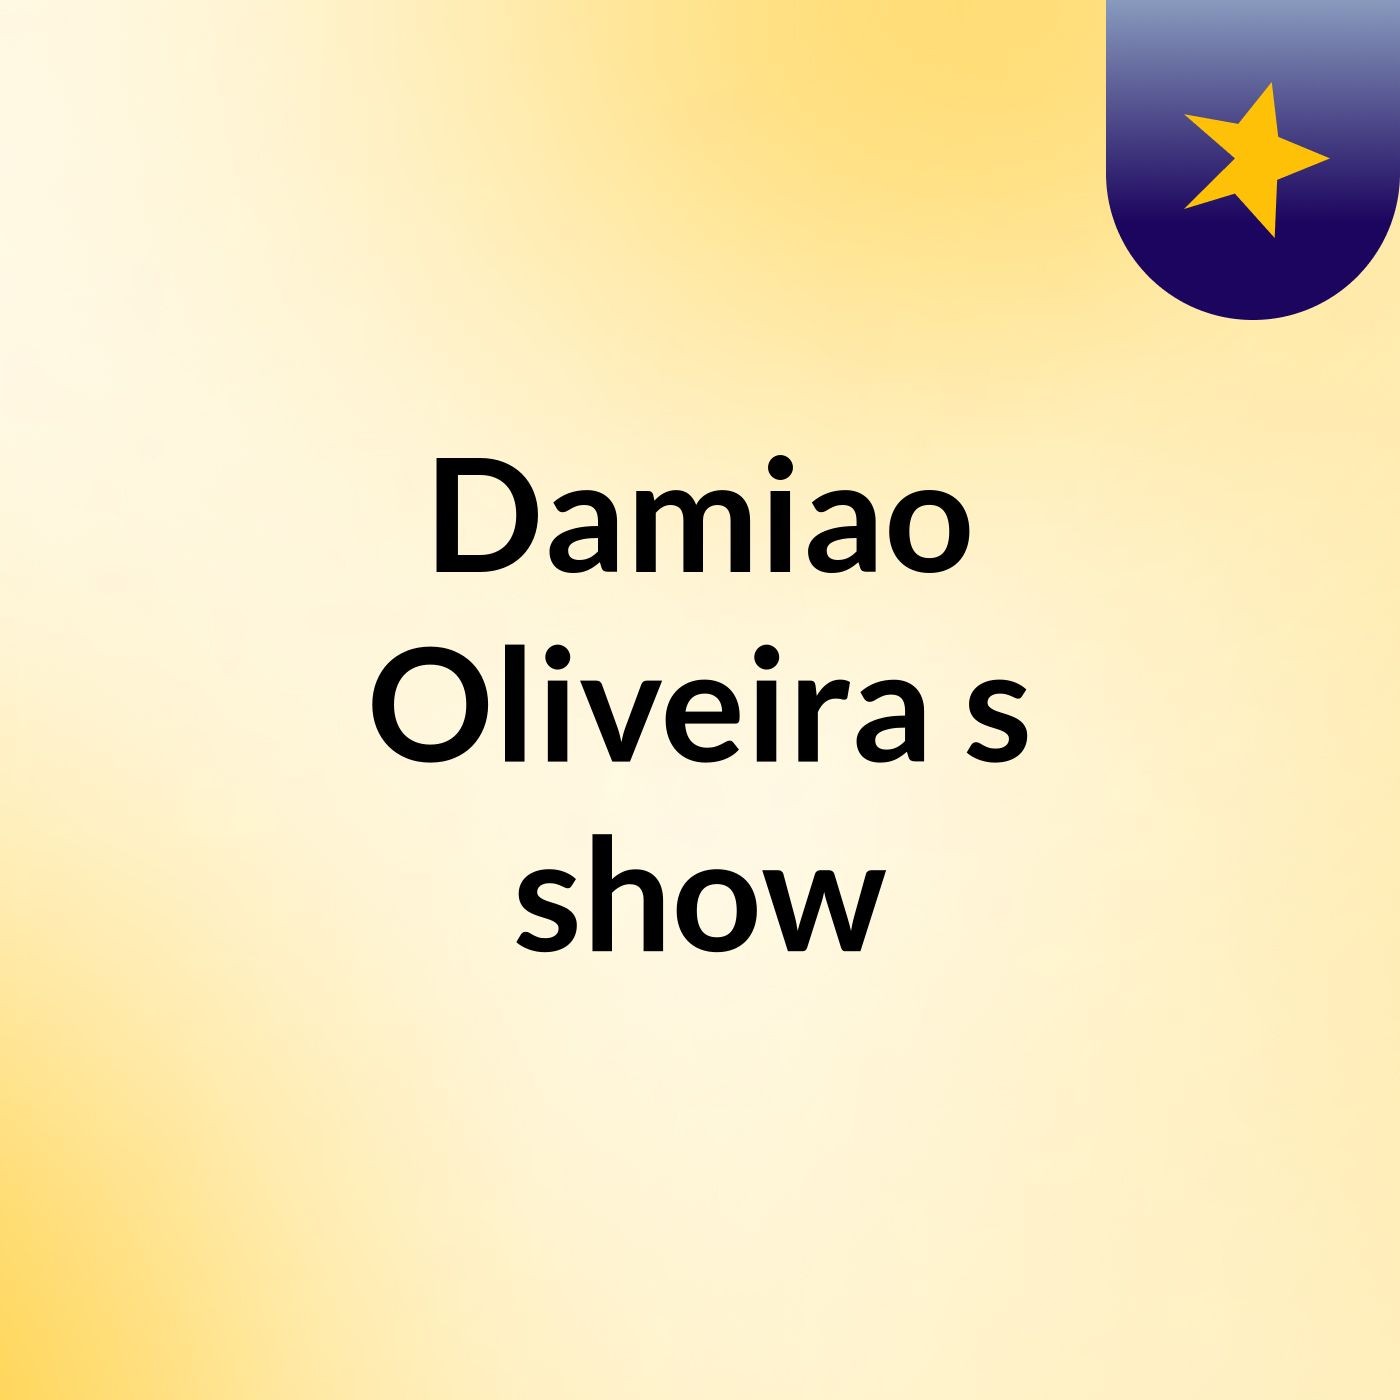 Damiao Oliveira's show